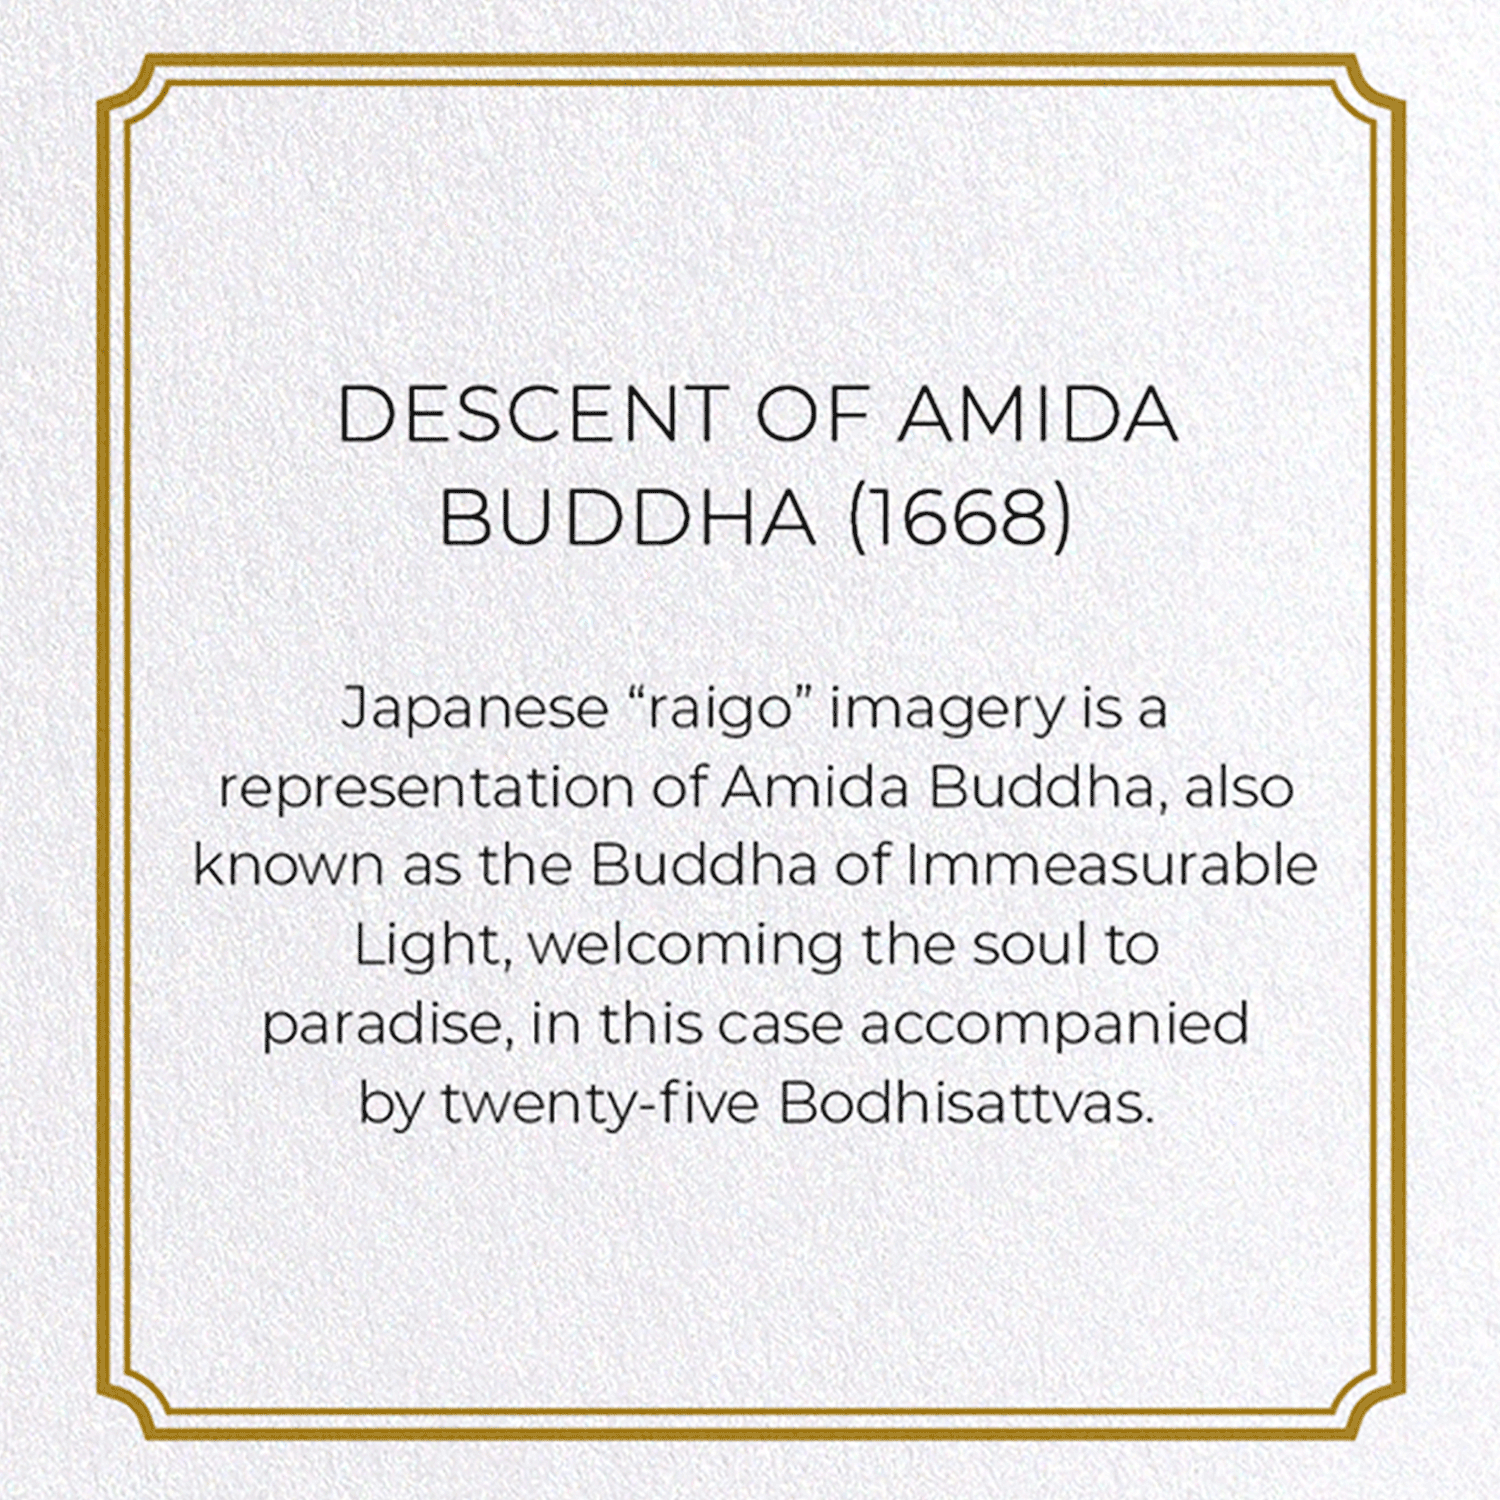 DESCENT OF AMIDA BUDDHA (1668)